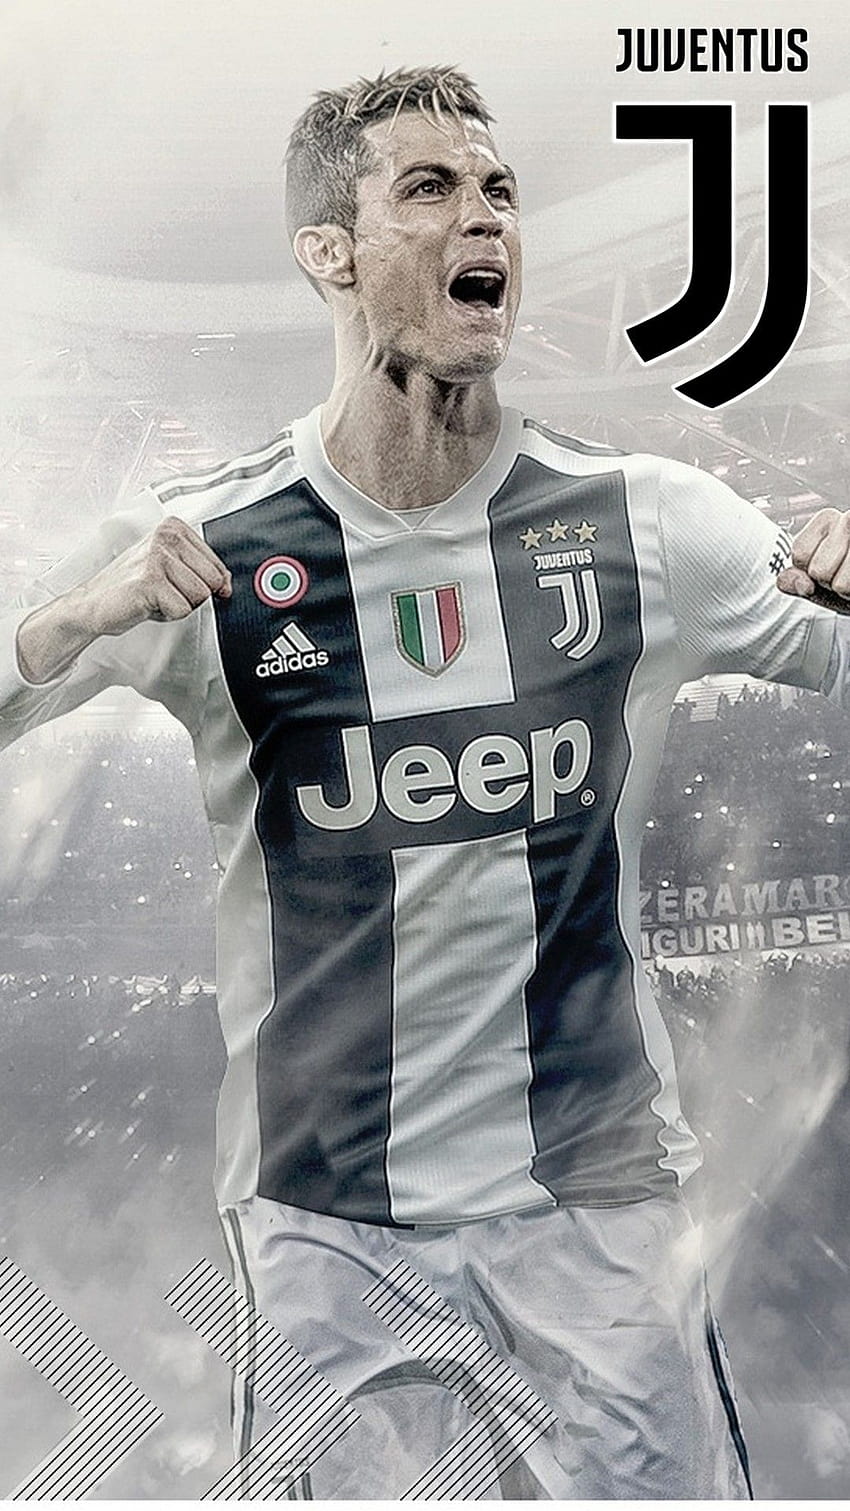 Wallpaper ID: 425224 / Sports Cristiano Ronaldo Phone Wallpaper, Juventus  F.C., Portuguese, Soccer, 800x1280 free download